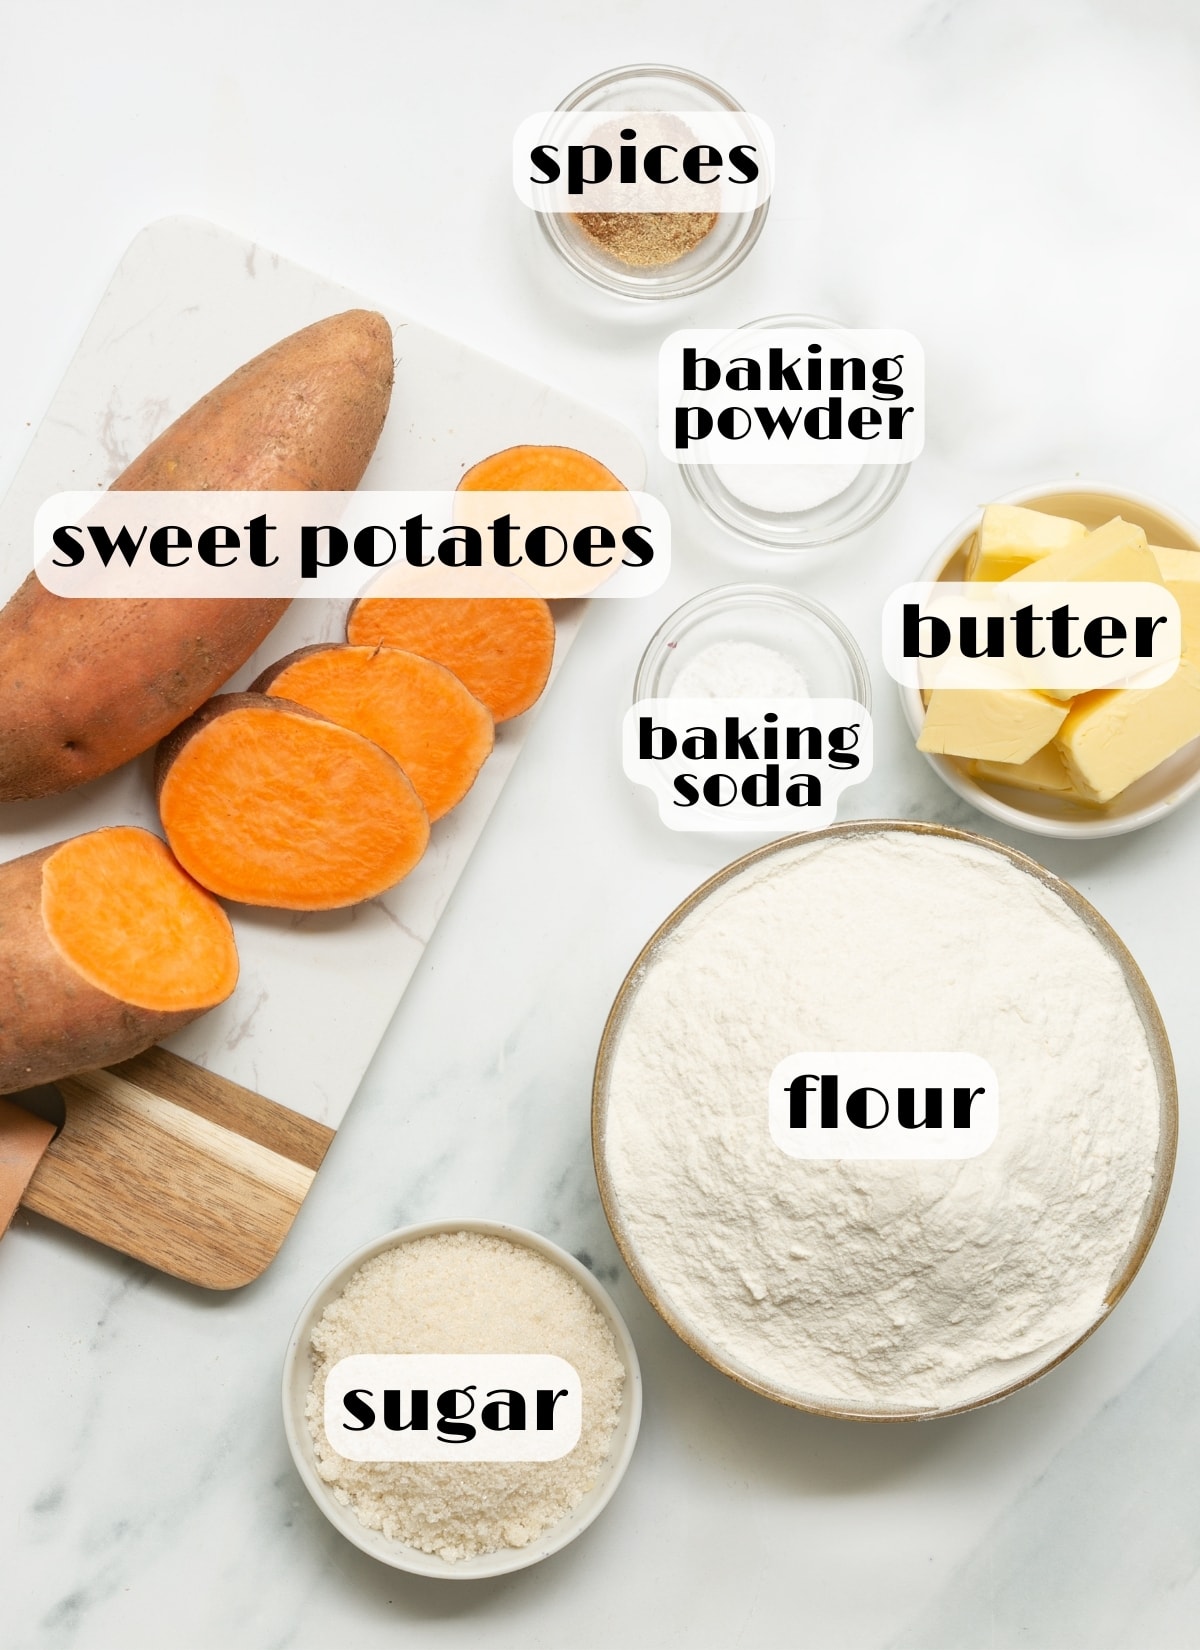 sweet potato cookie ingredients: flour, sweet potatoes, butter, sugar, baking soda, baking powder, spices.